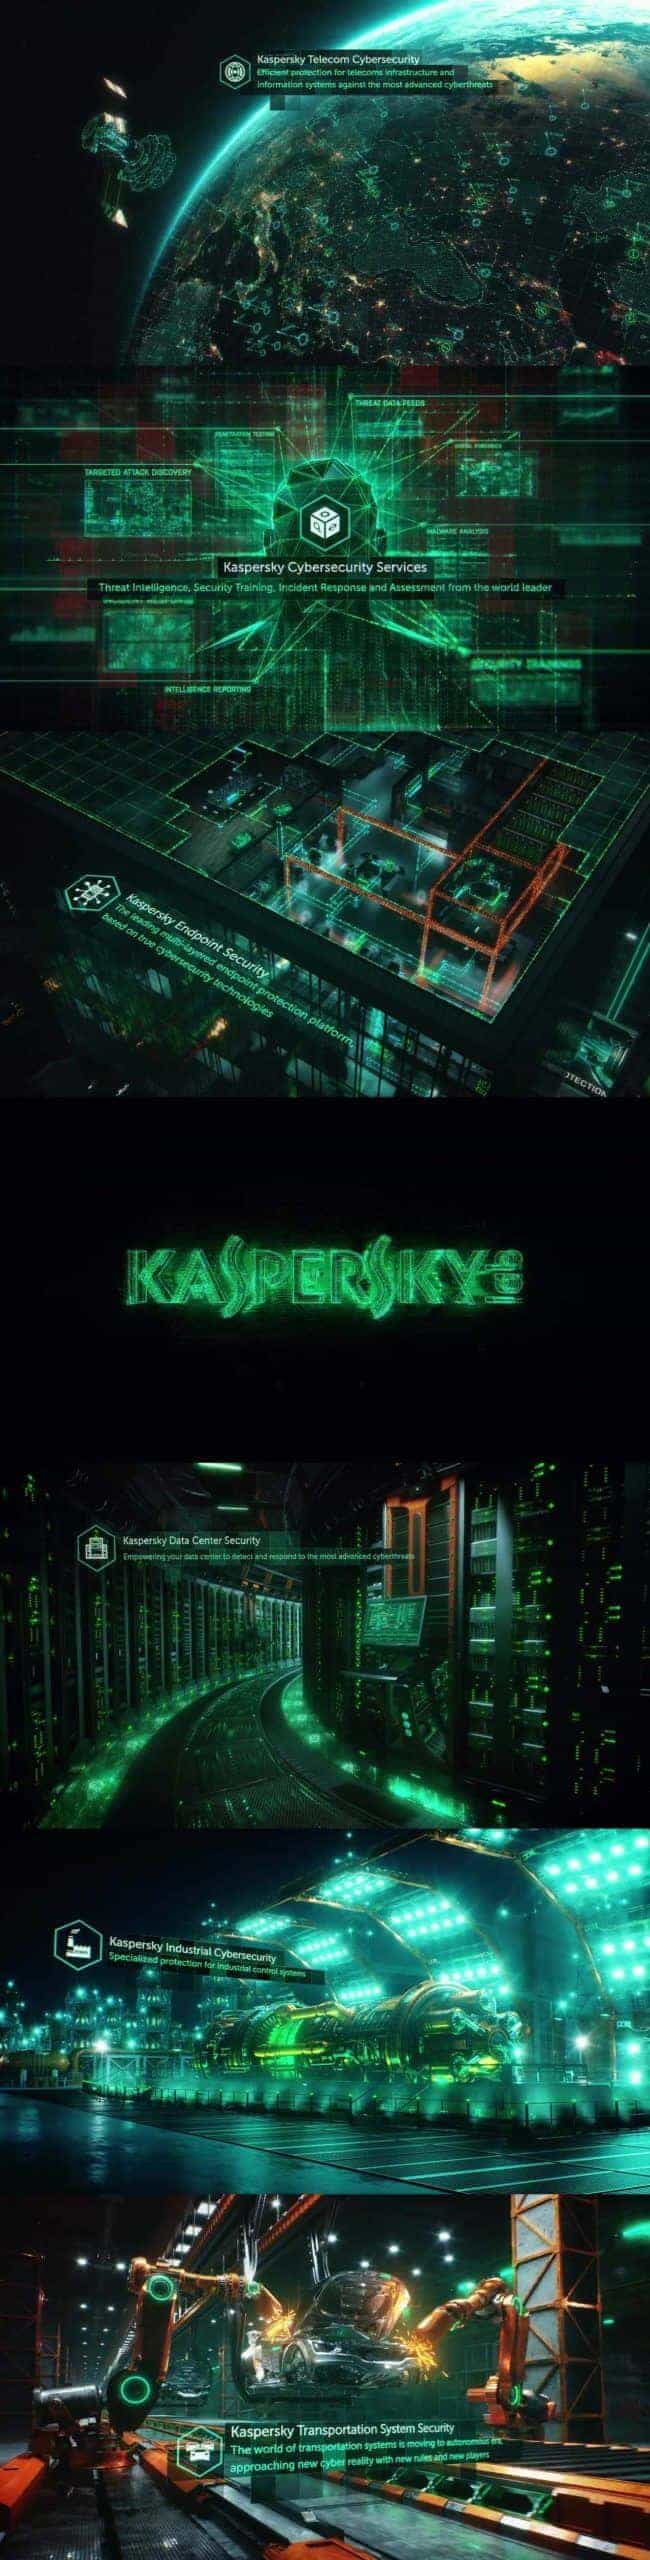 Kaspersky Lab Enterprise Cybersecurity Movie on Vimeo scaled